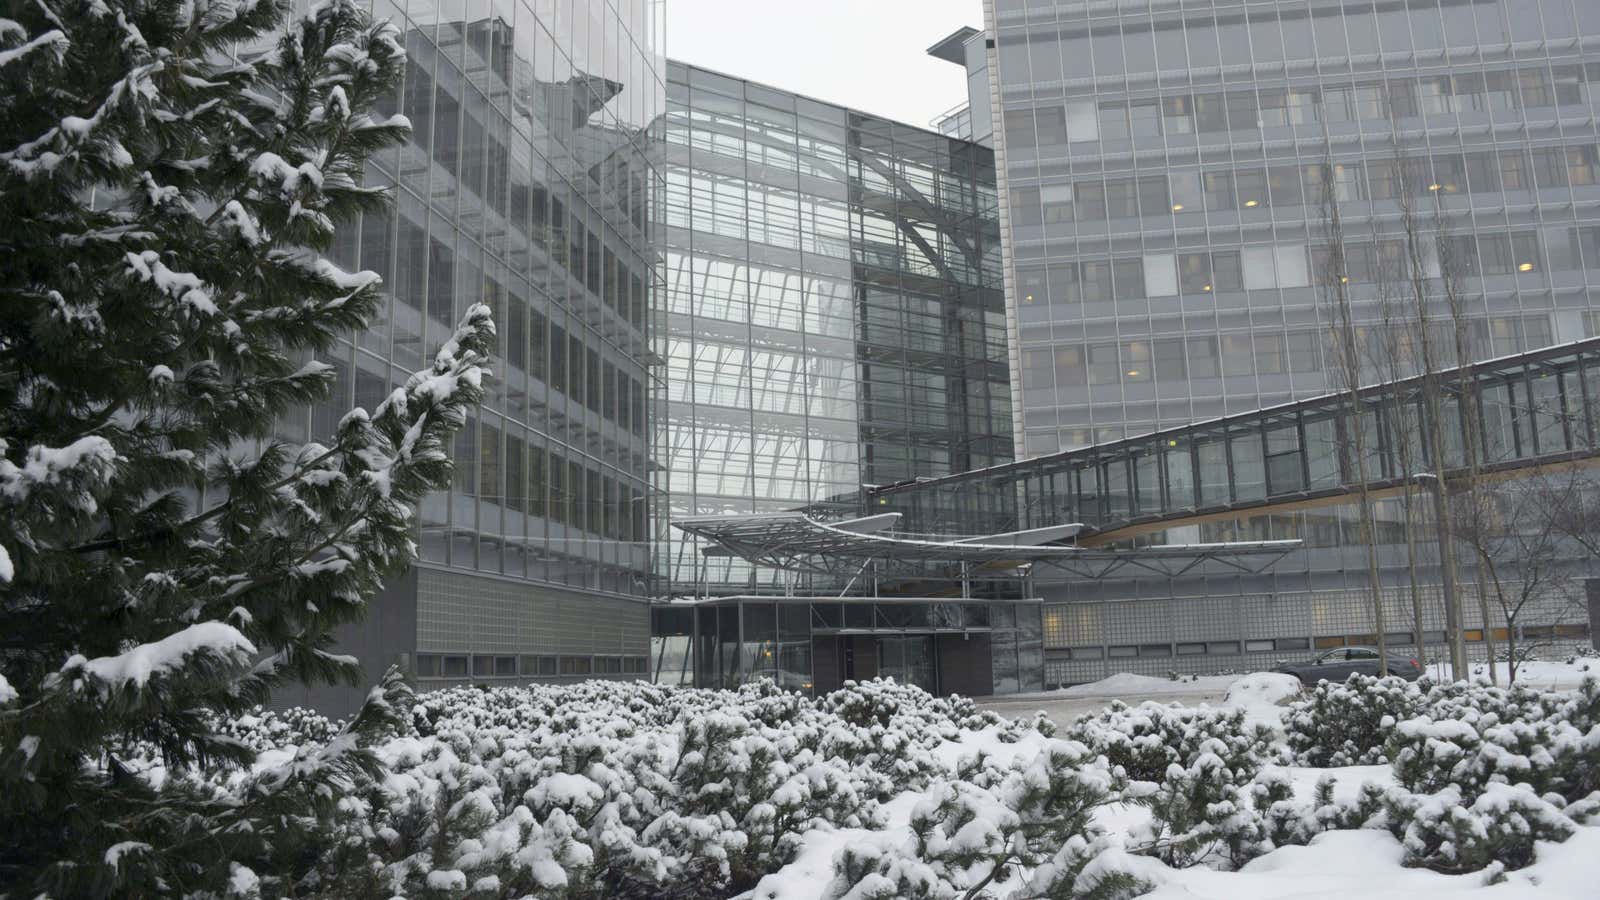 Nokia’s headquarters in Finland.